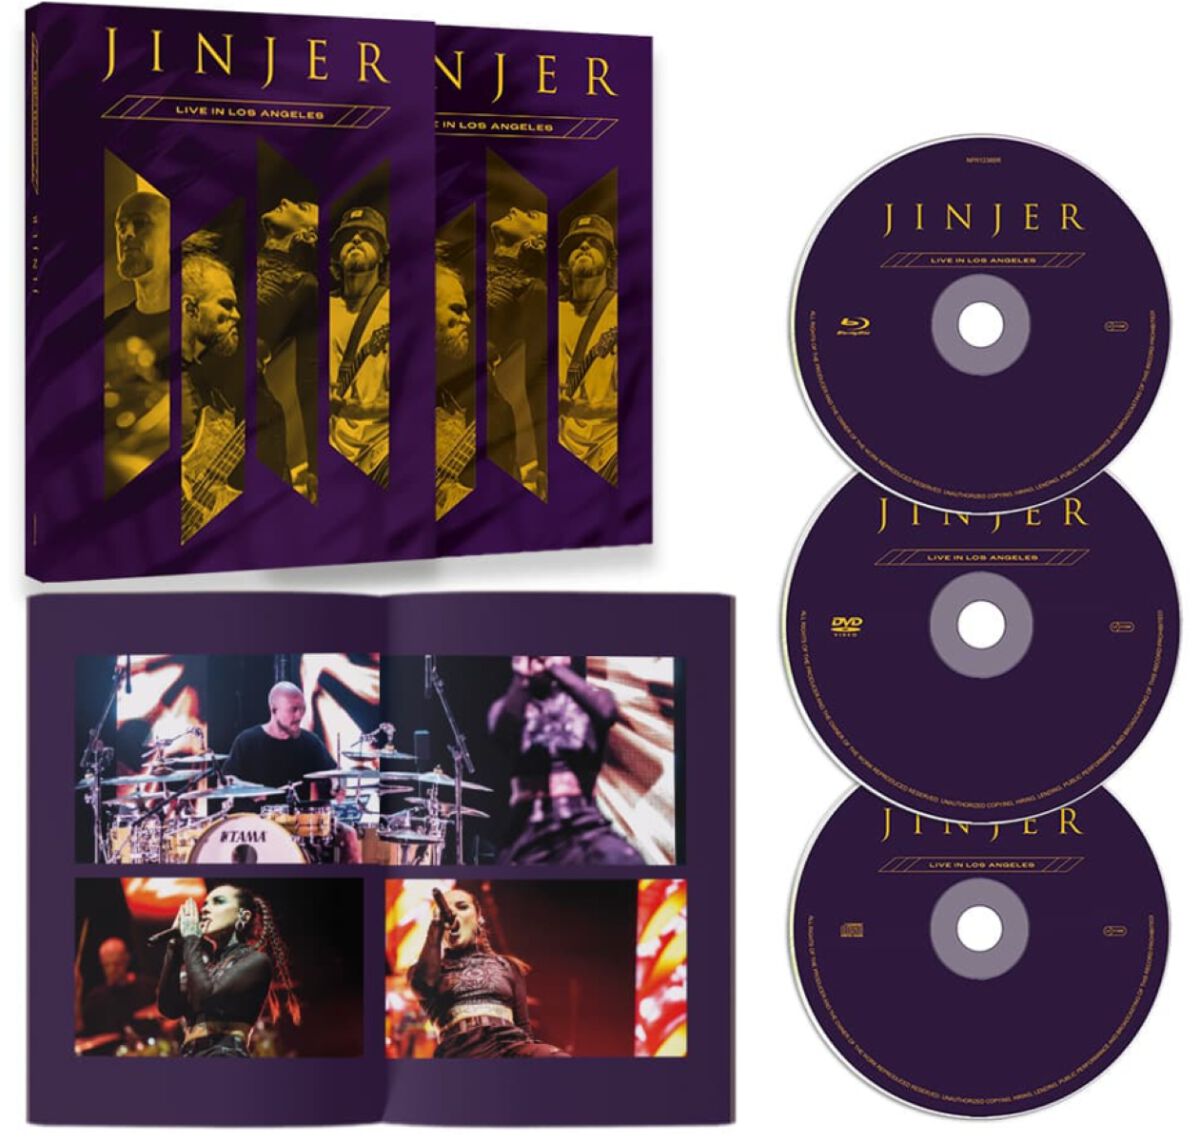 Live in Los Angeles von Jinjer - CD & DVD & Blu-ray (Standard)